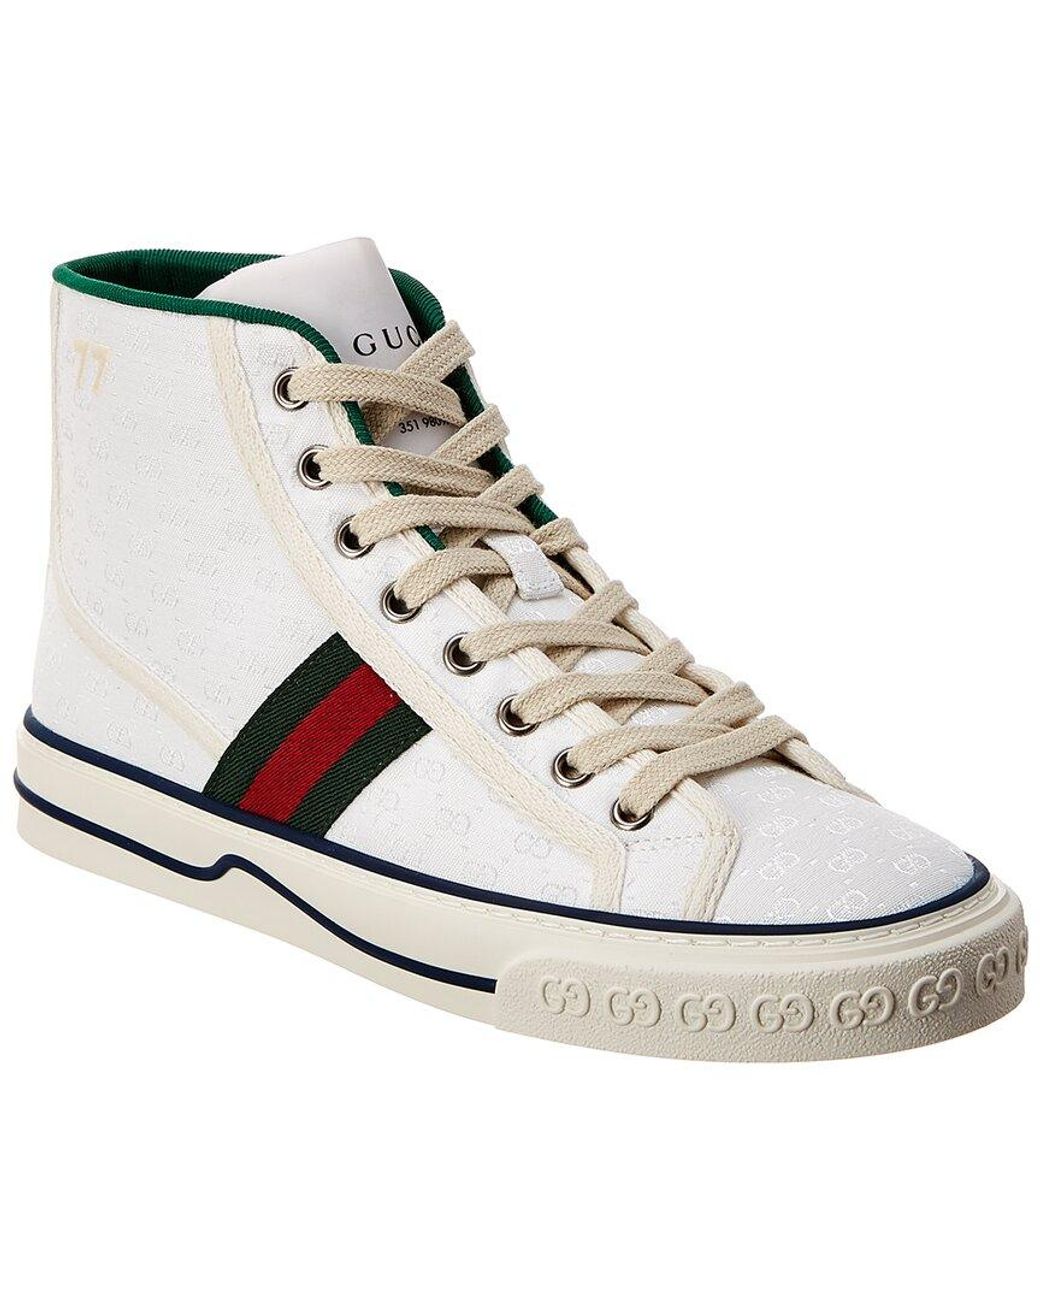 Gucci Tennis 1977 High Top Sneaker in White | Lyst